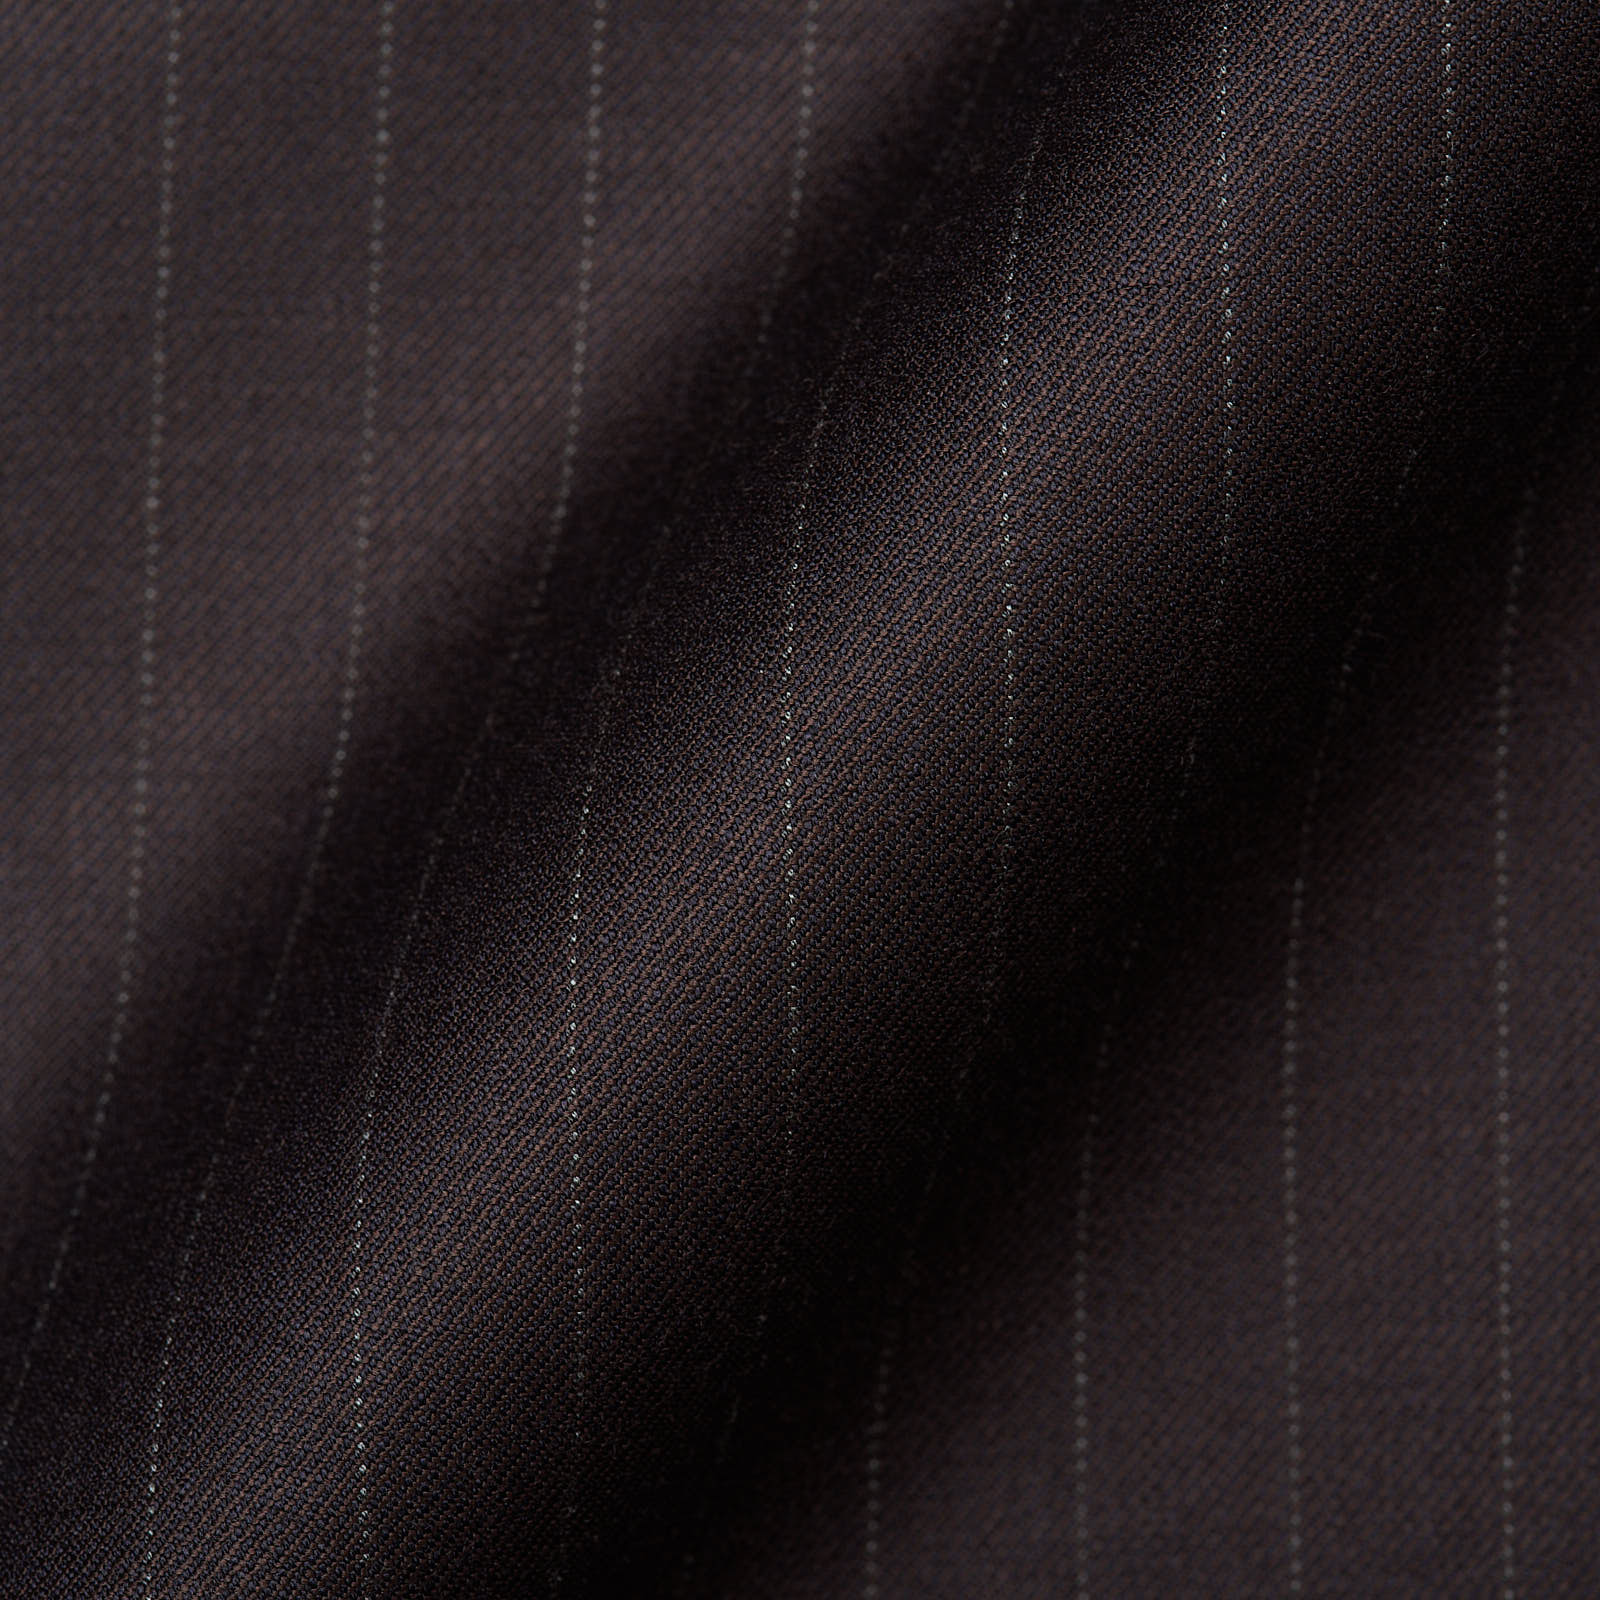 D'AVENZA Handmade Diplomat Brown Pinstriped Wool Super 150's Suit